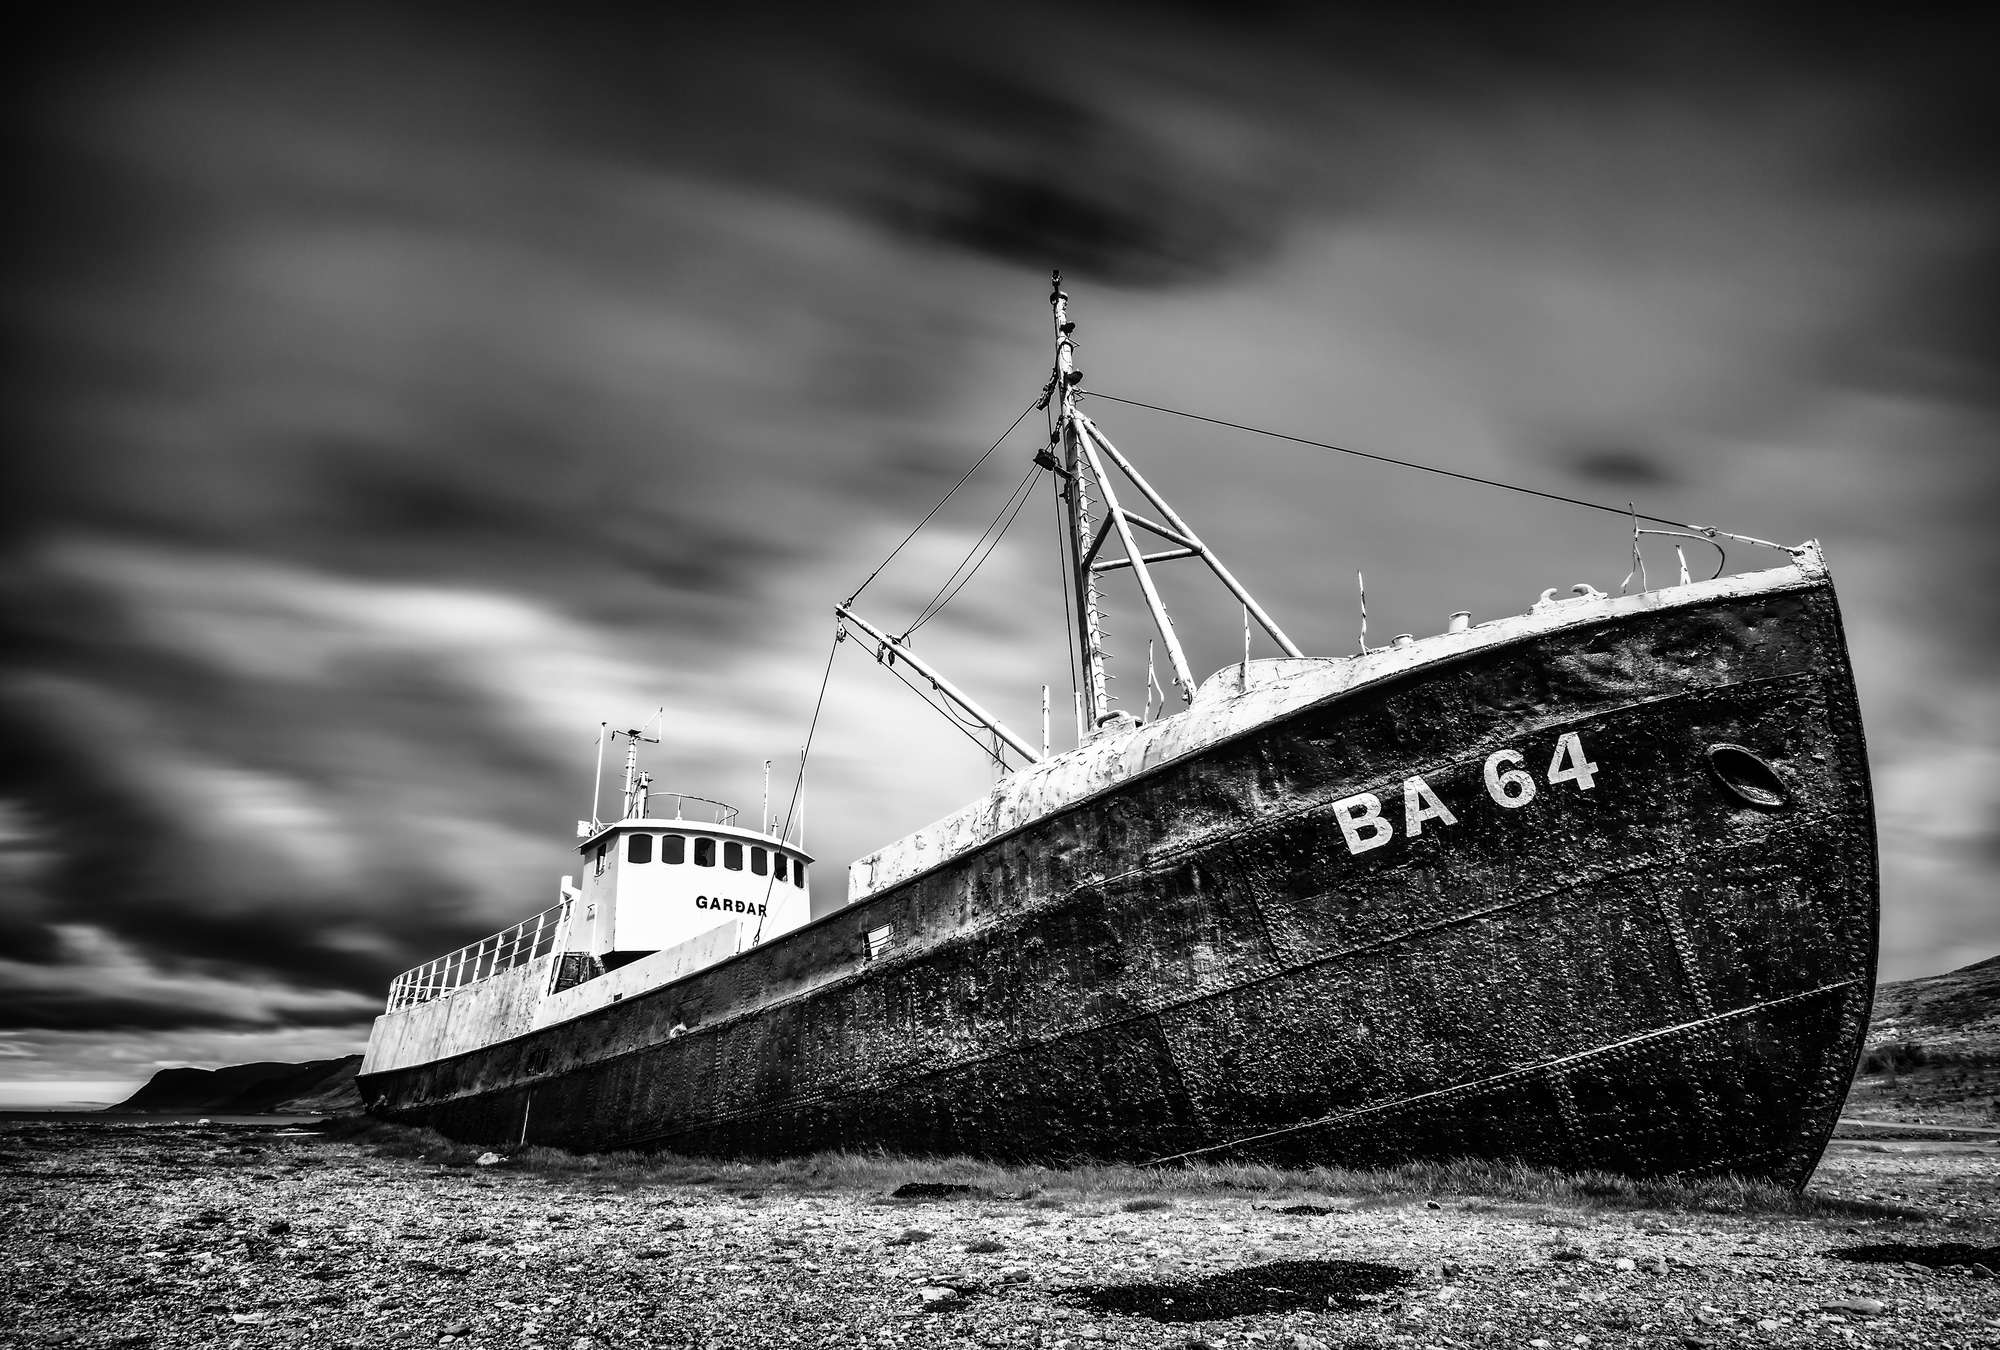             Photo wallpaper stranded shipwreck - black and white
        